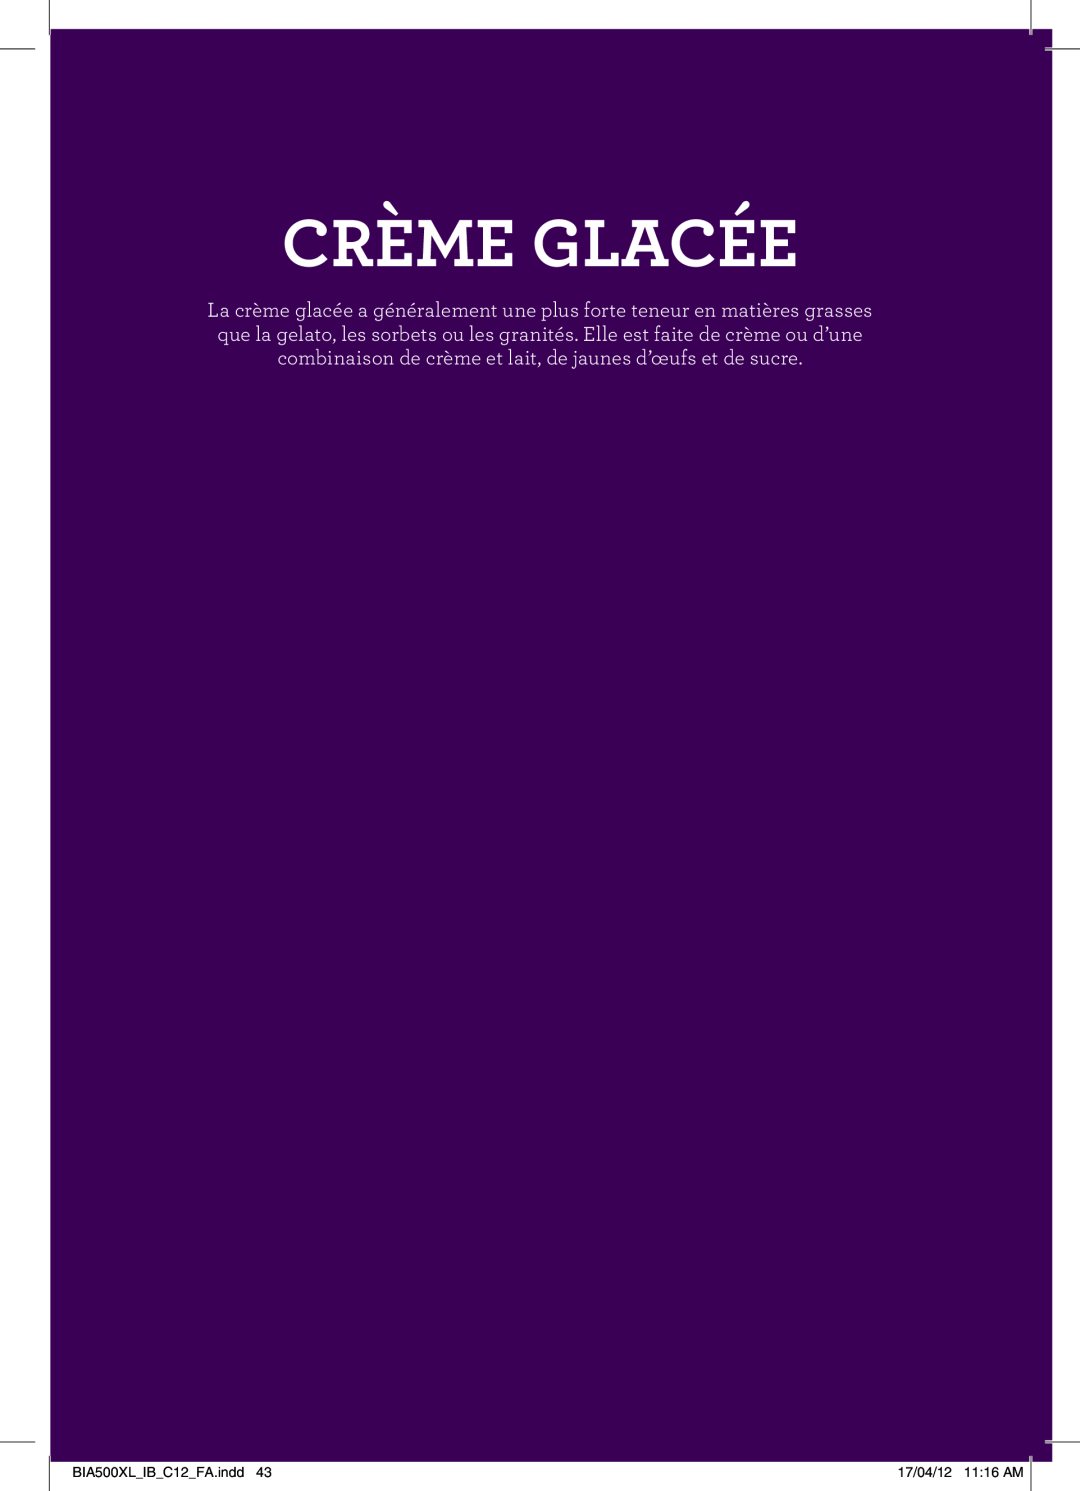 Breville manual Crème Glacée, BIA500XLIBC12FA.indd, 17/04/12 1116 AM 